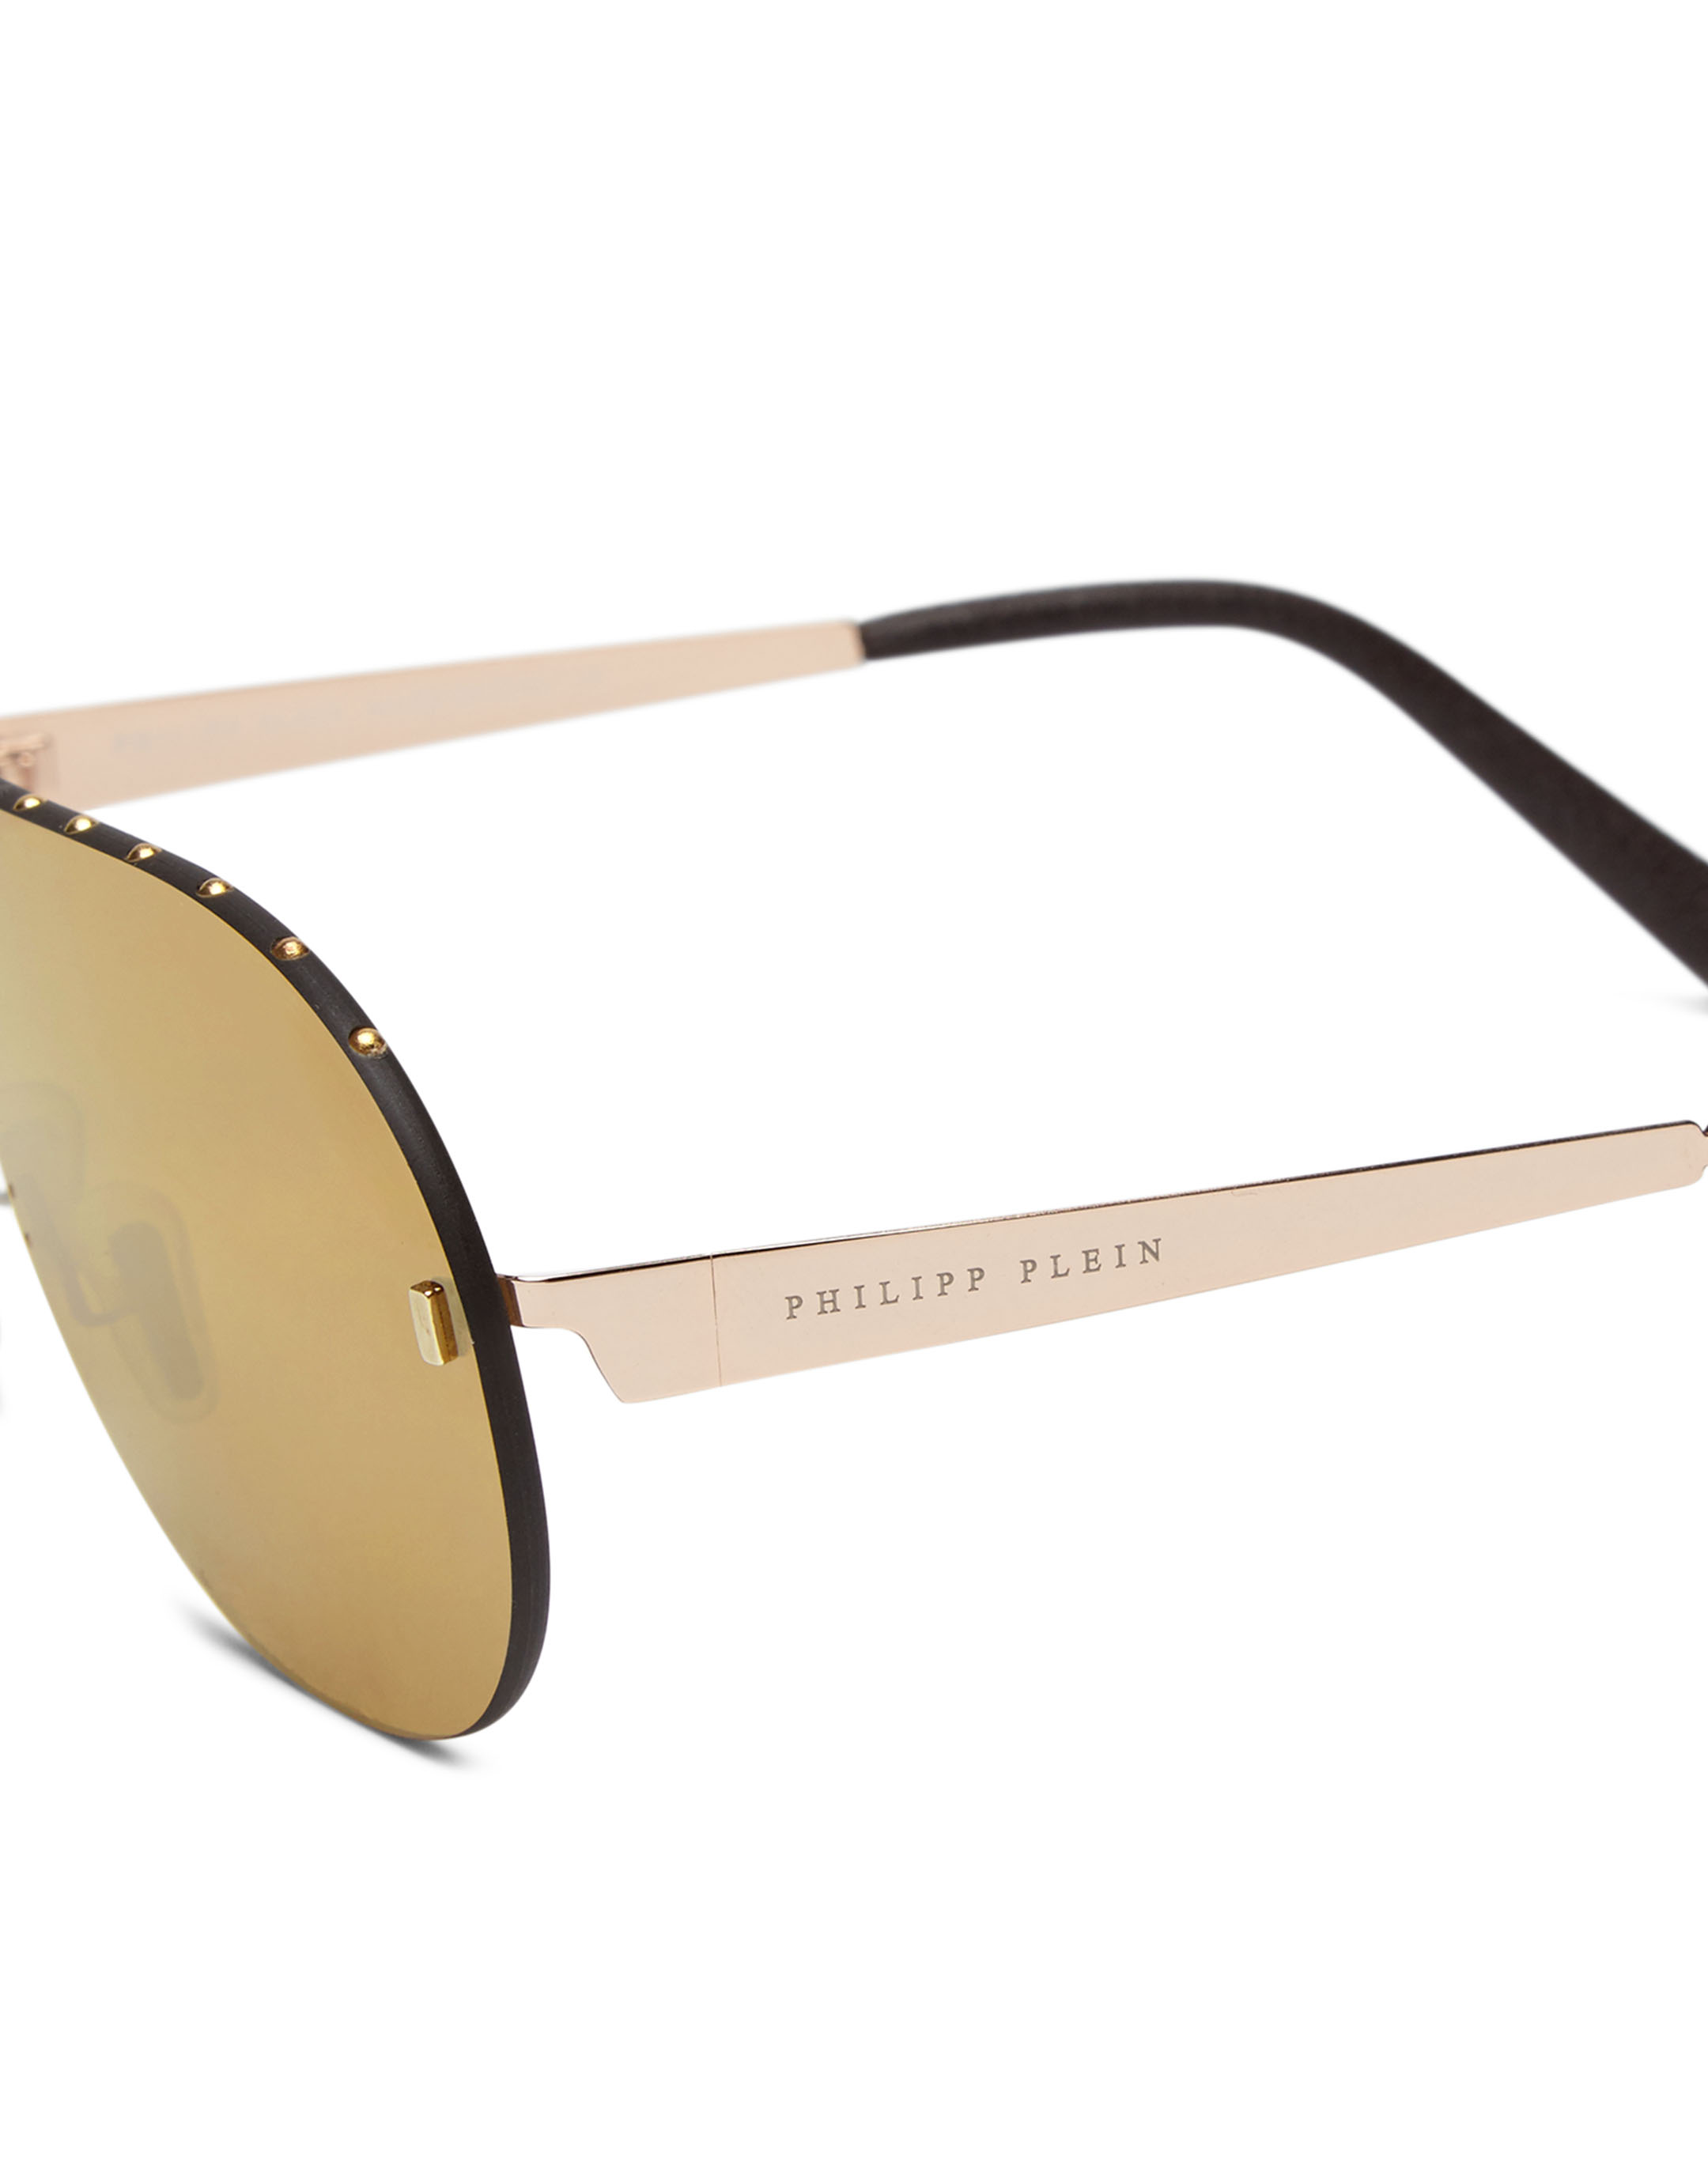 Studs Sunglasses Target Outlet Plein | Philipp